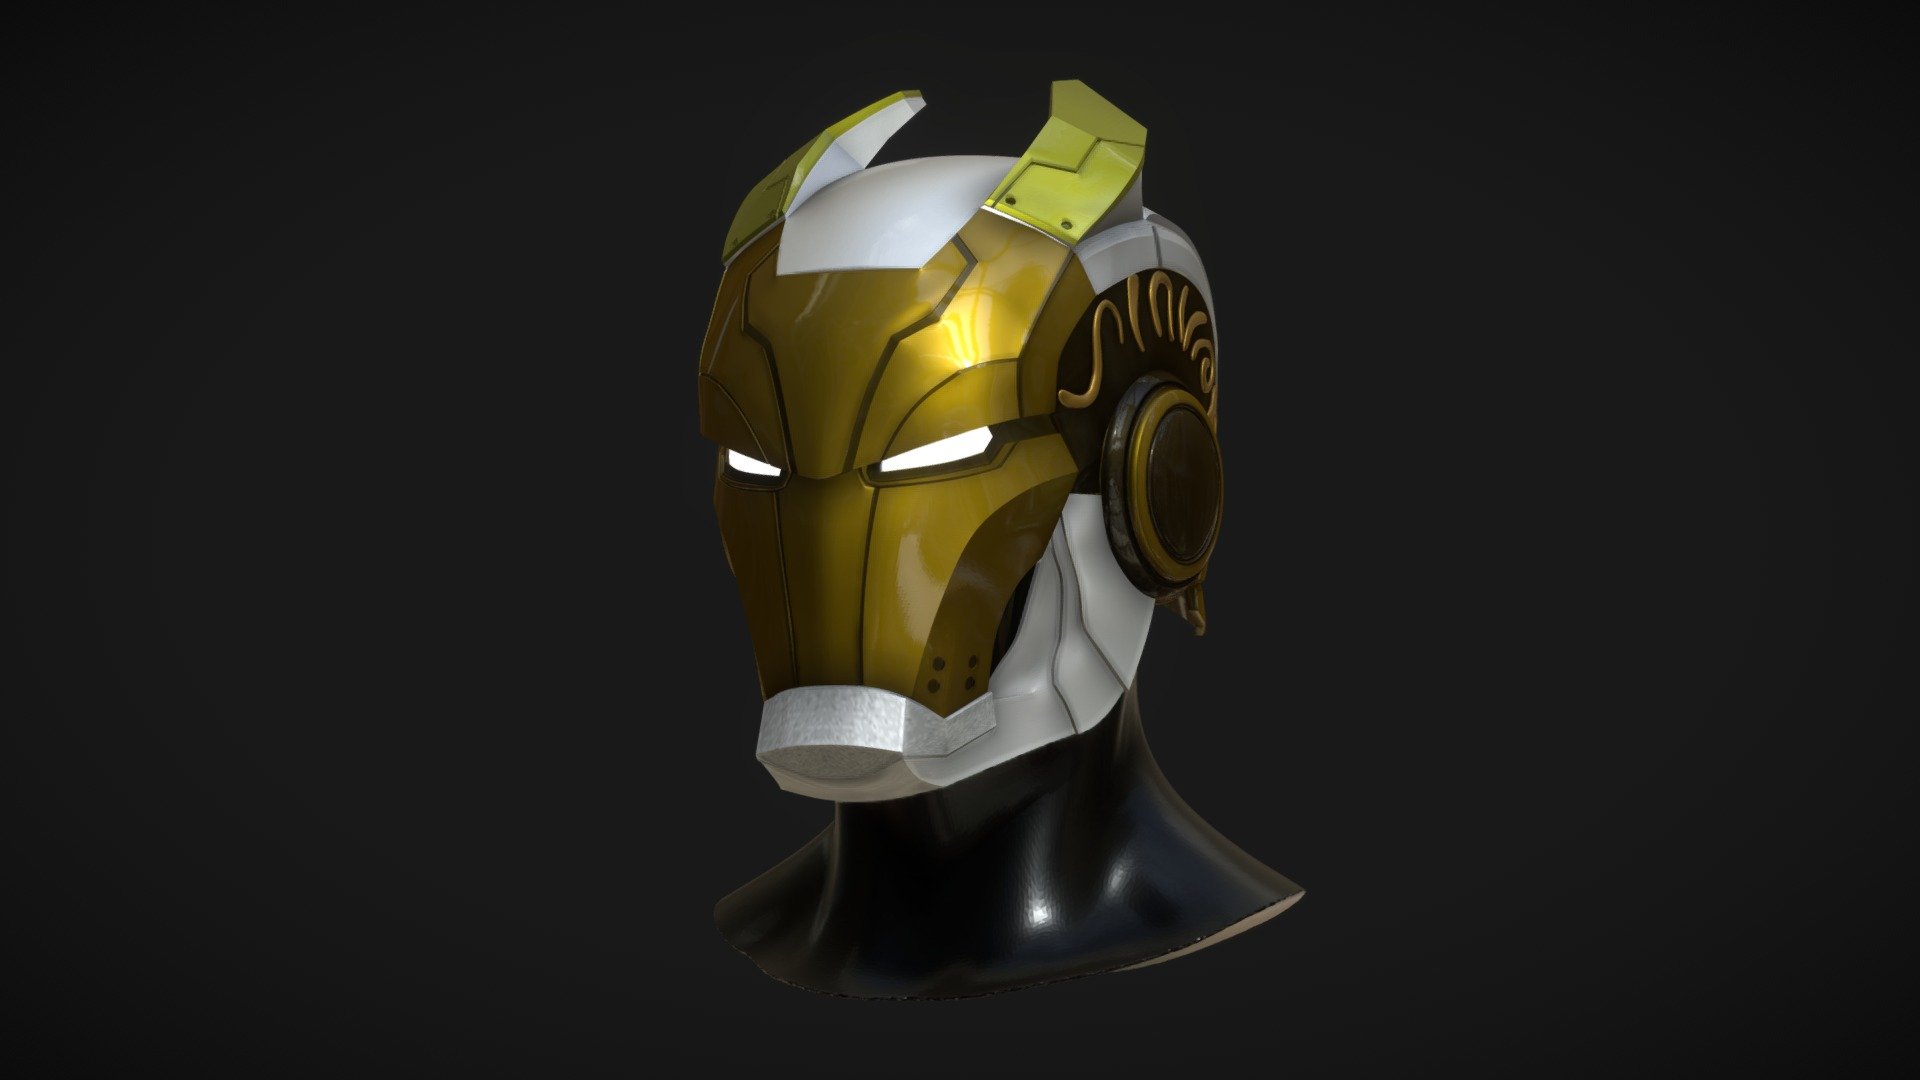 iron man face mask printable